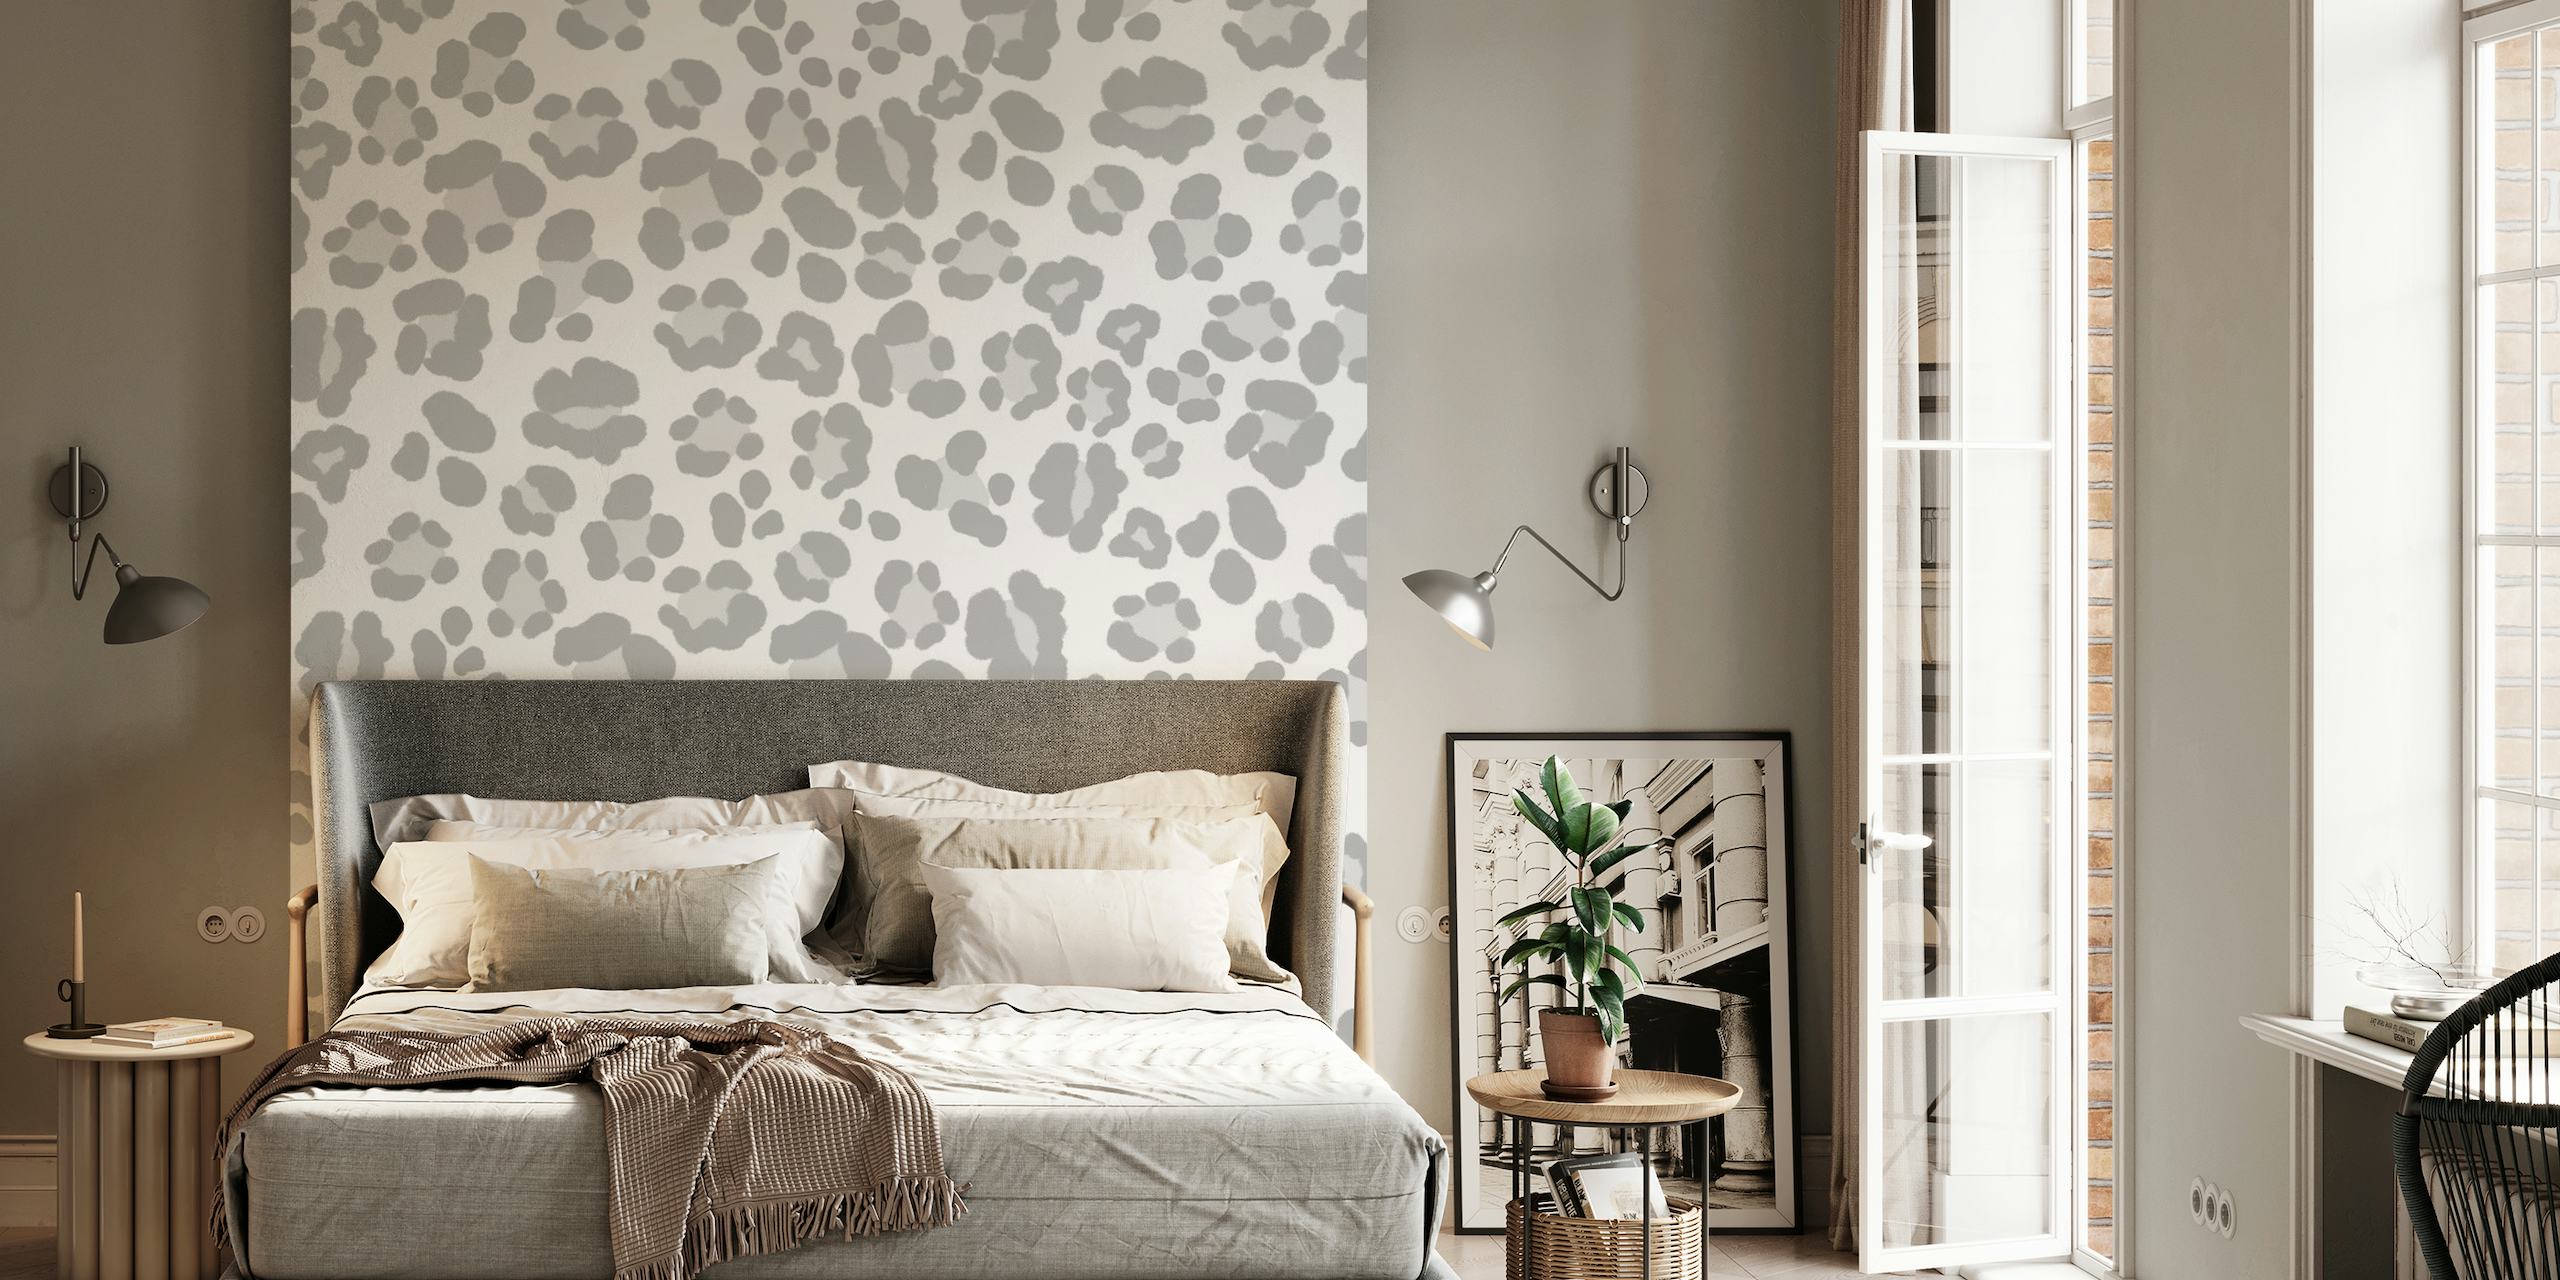 Leopard Print Glam 5 veggmaleri med et subtilt grått leopardmønster for elegant interiør